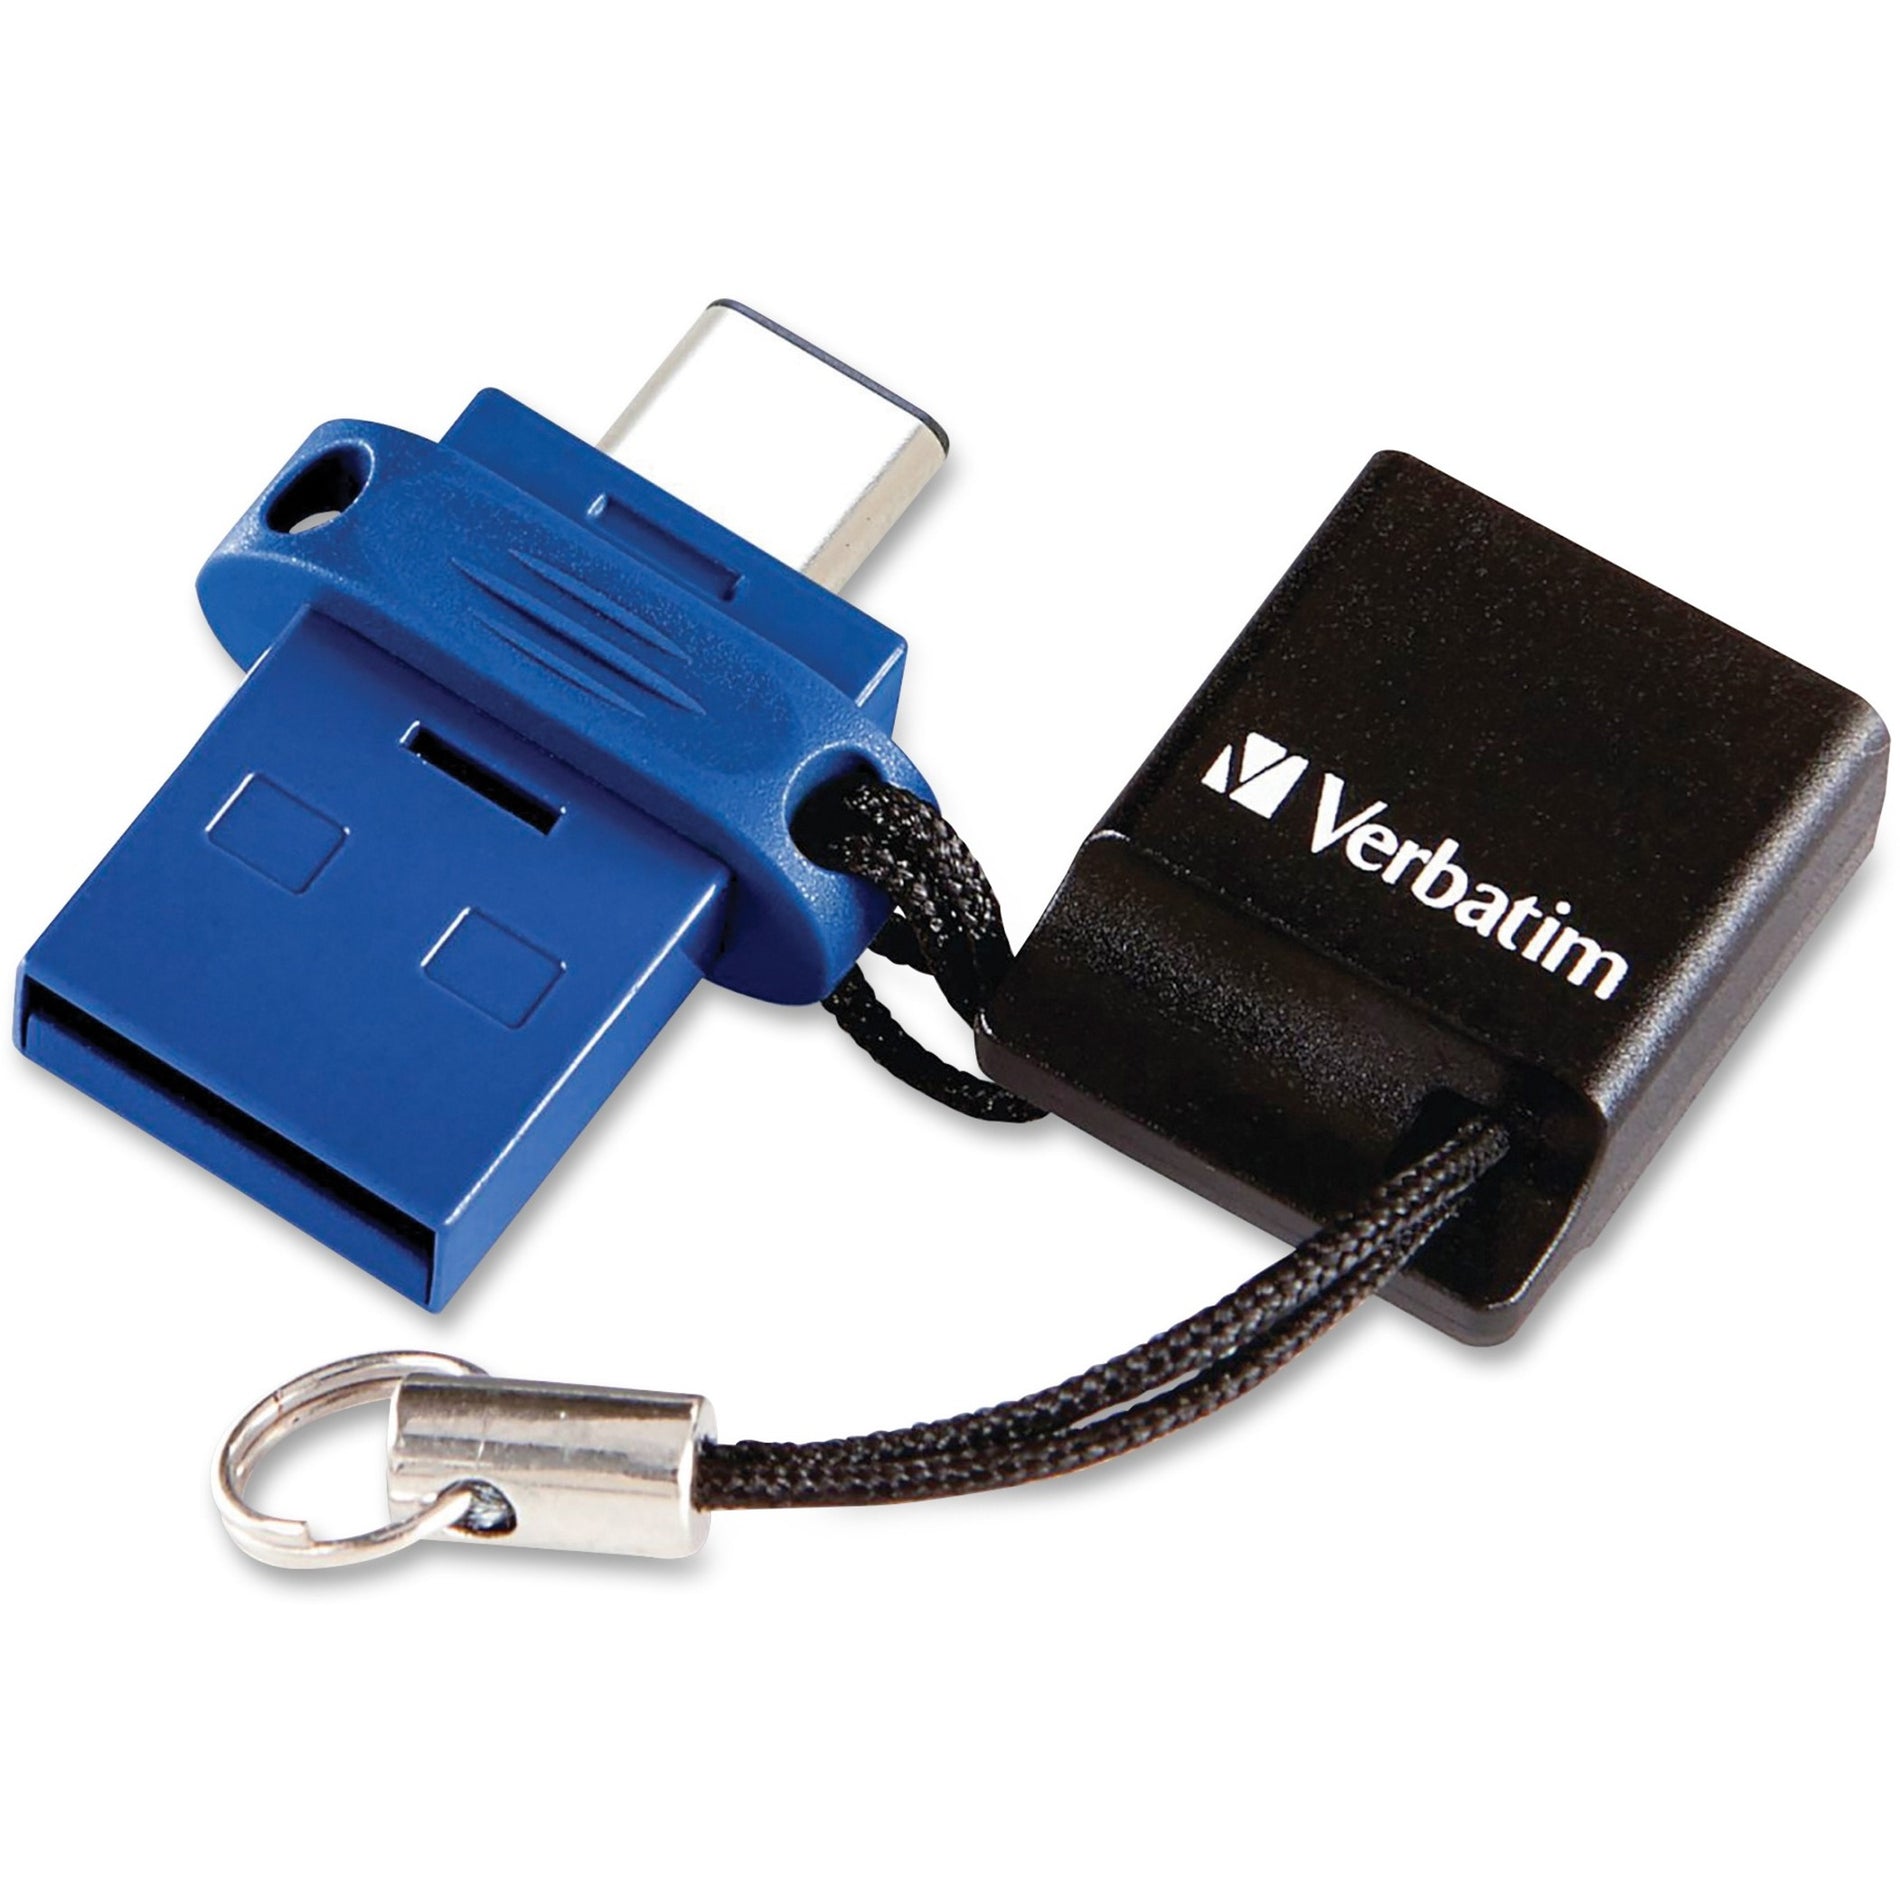 Marca: Microban Modelo: 99153 Store 'n' Go Dual USB 3.2 Gen 1 Flash Drive 16GB Azul